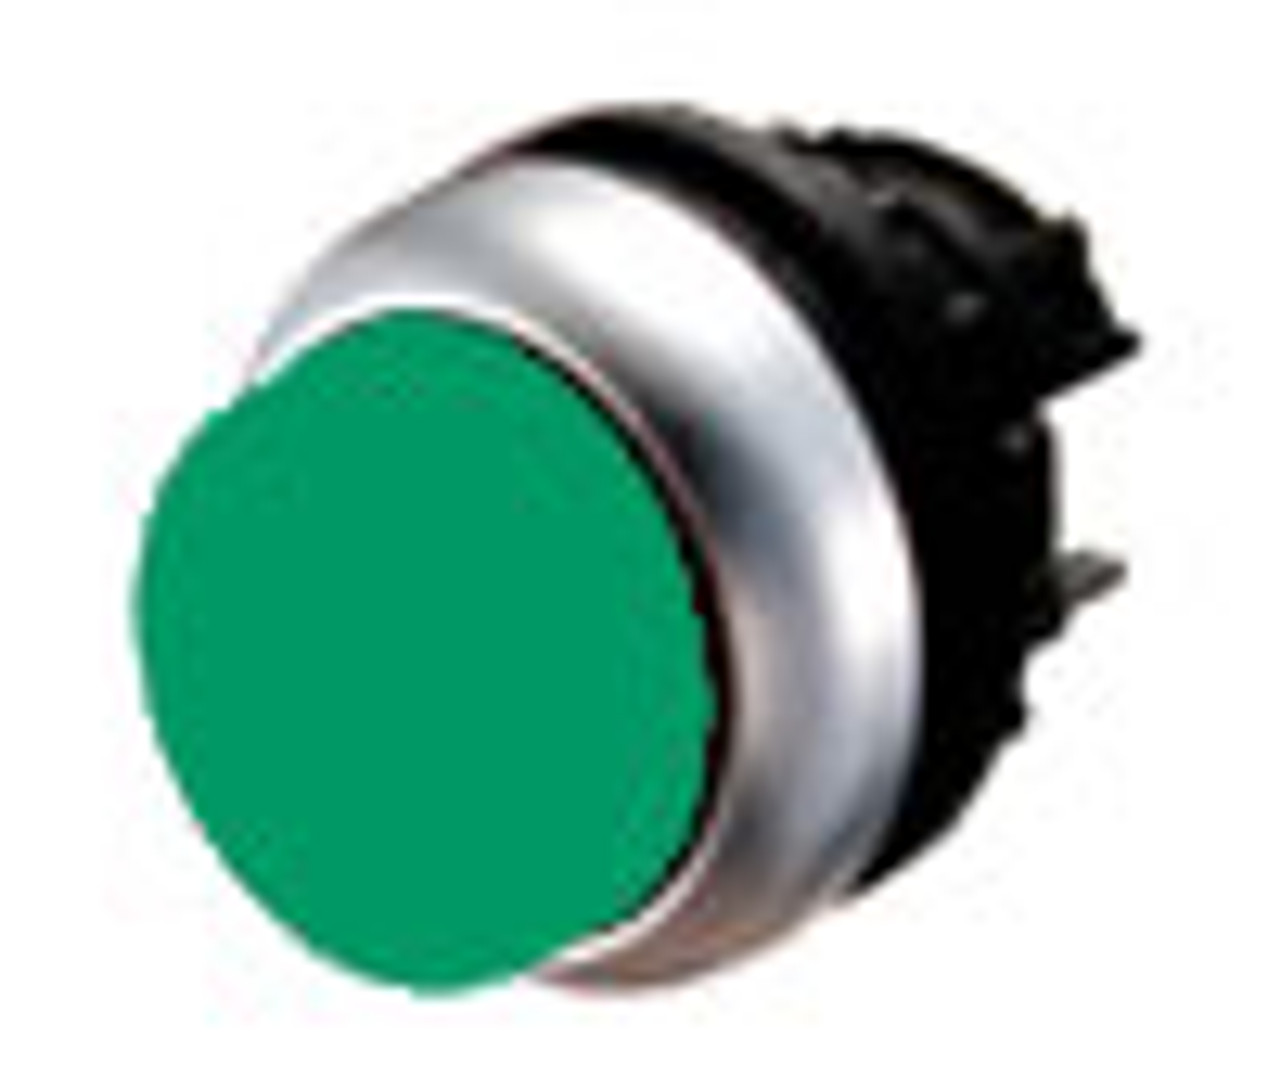 Moeller M22-DRH-G green push button